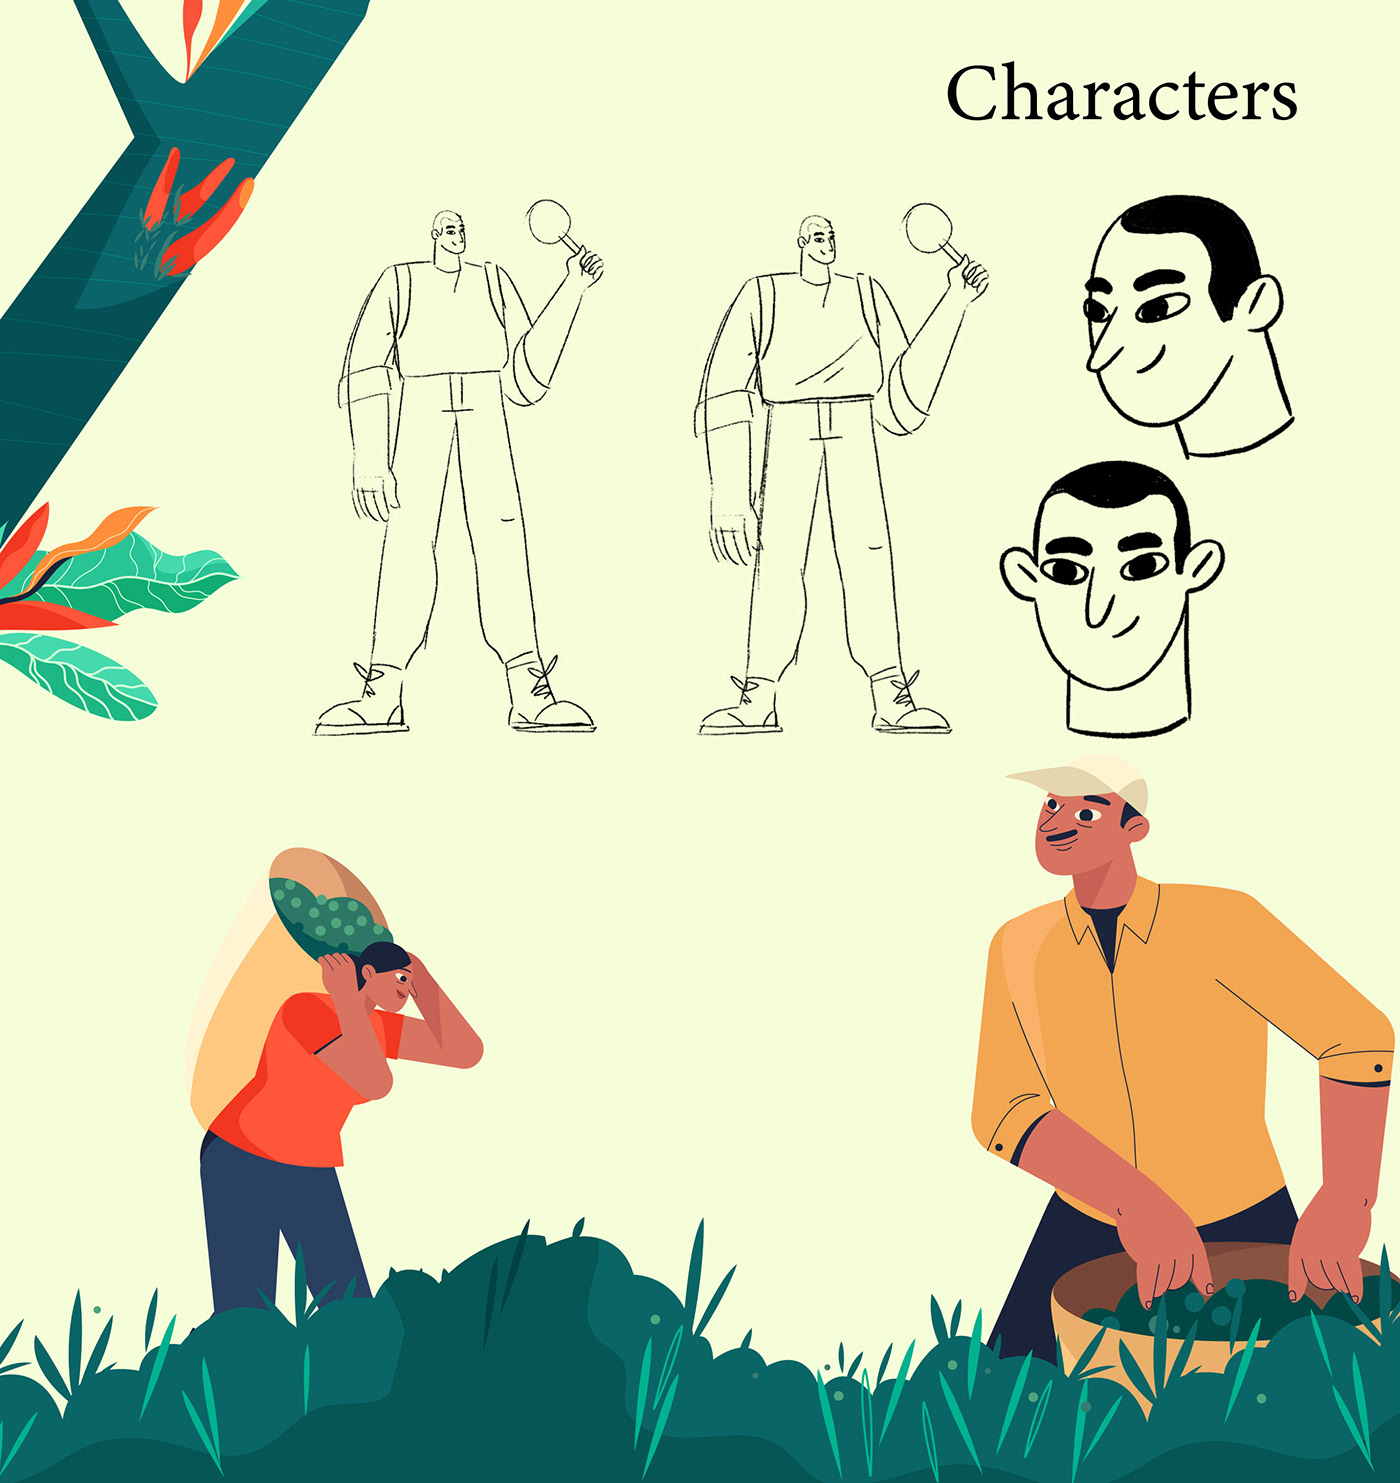 2D Animation animation  ArtDirection artwork Character design  concept art Digital Art  digital illustration ILLUSTRATION  storytelling  